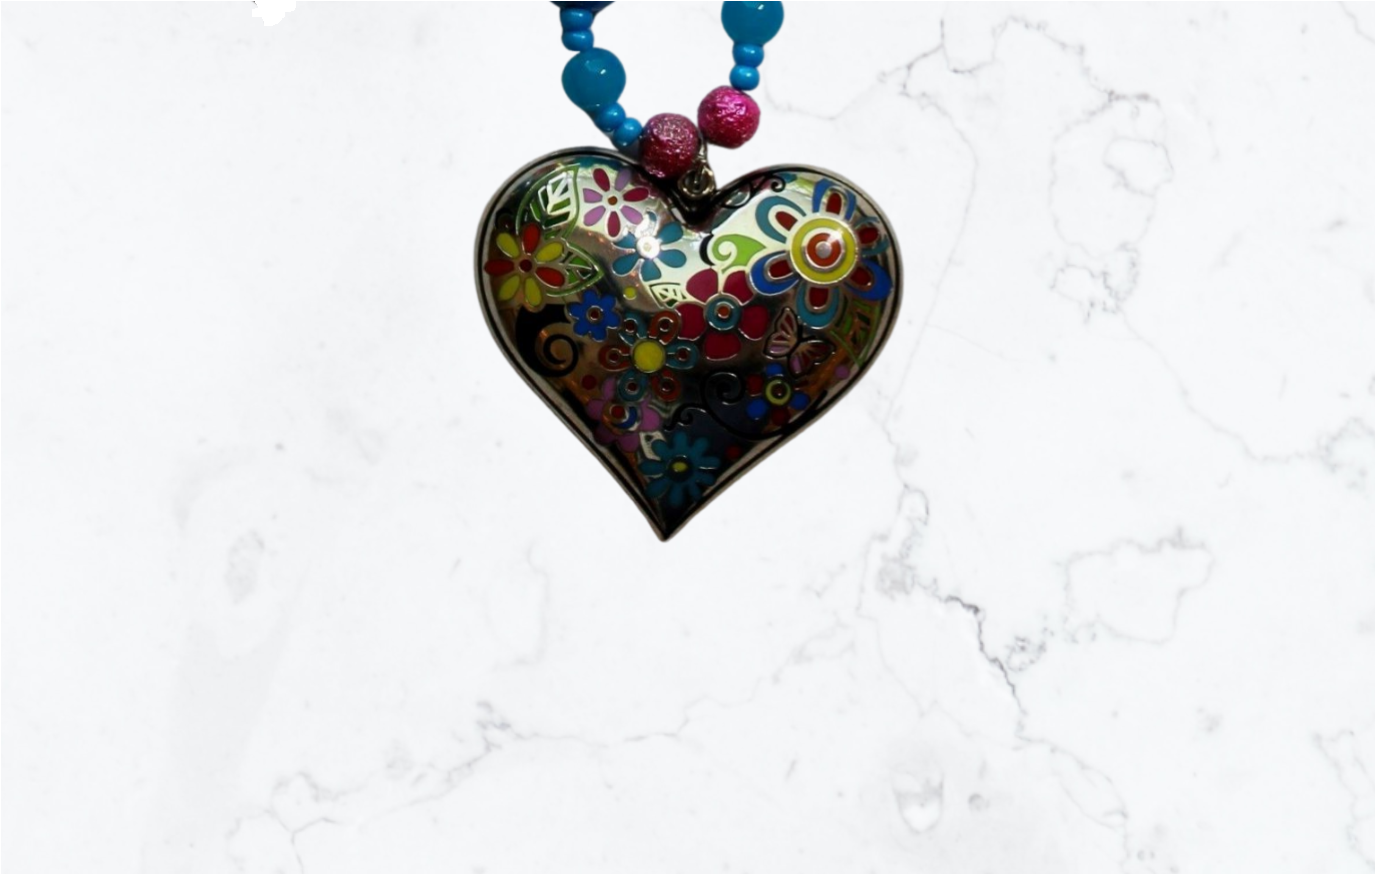 Flower Heart Pendant Bead Necklace